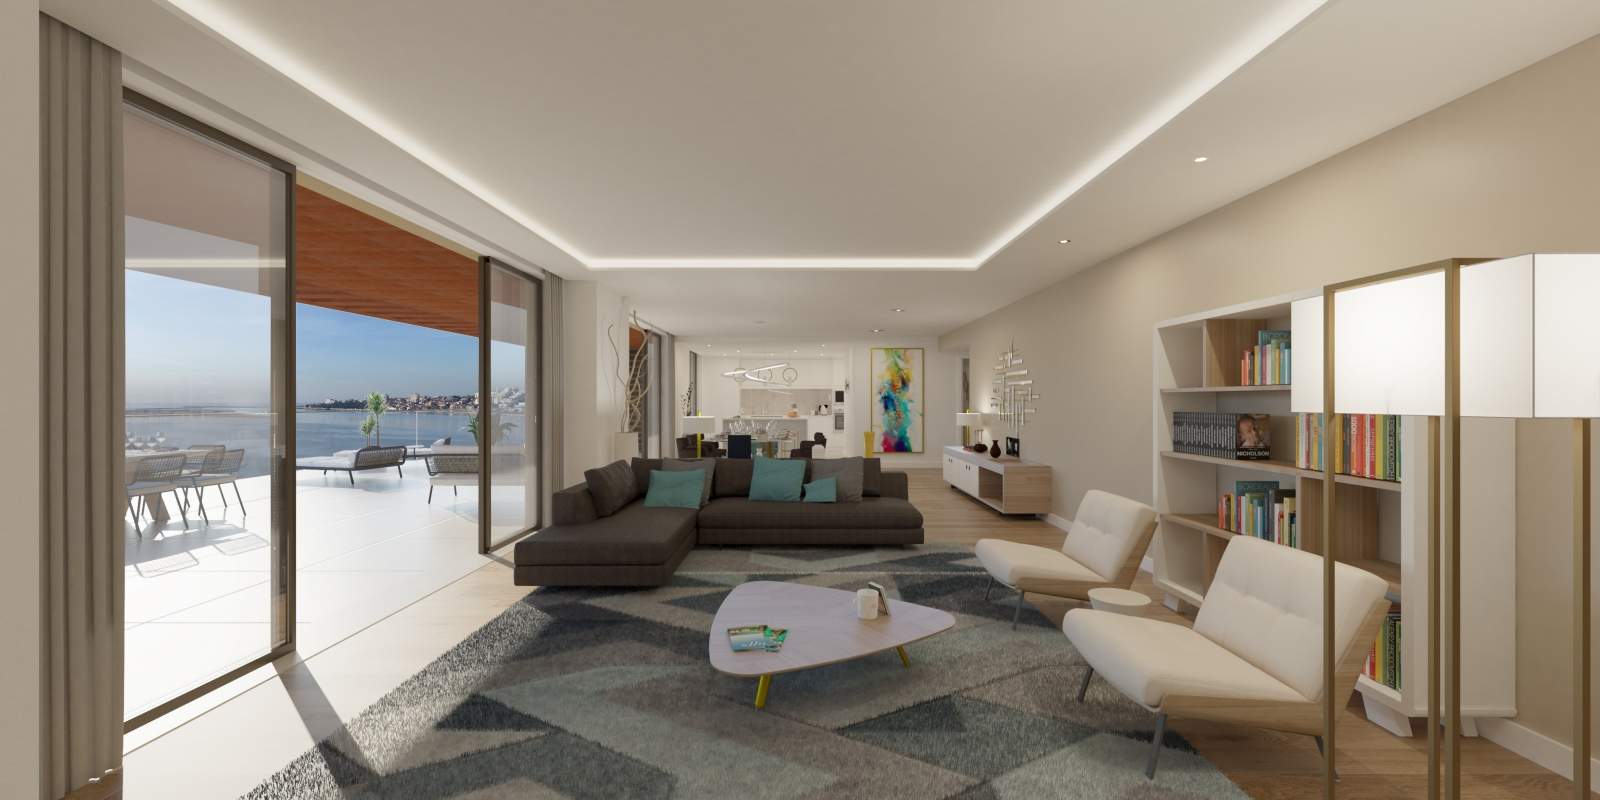 Apartment for sale with terrace, in exclusive condominium, V. N. Gaia, Porto, Portugal_175808